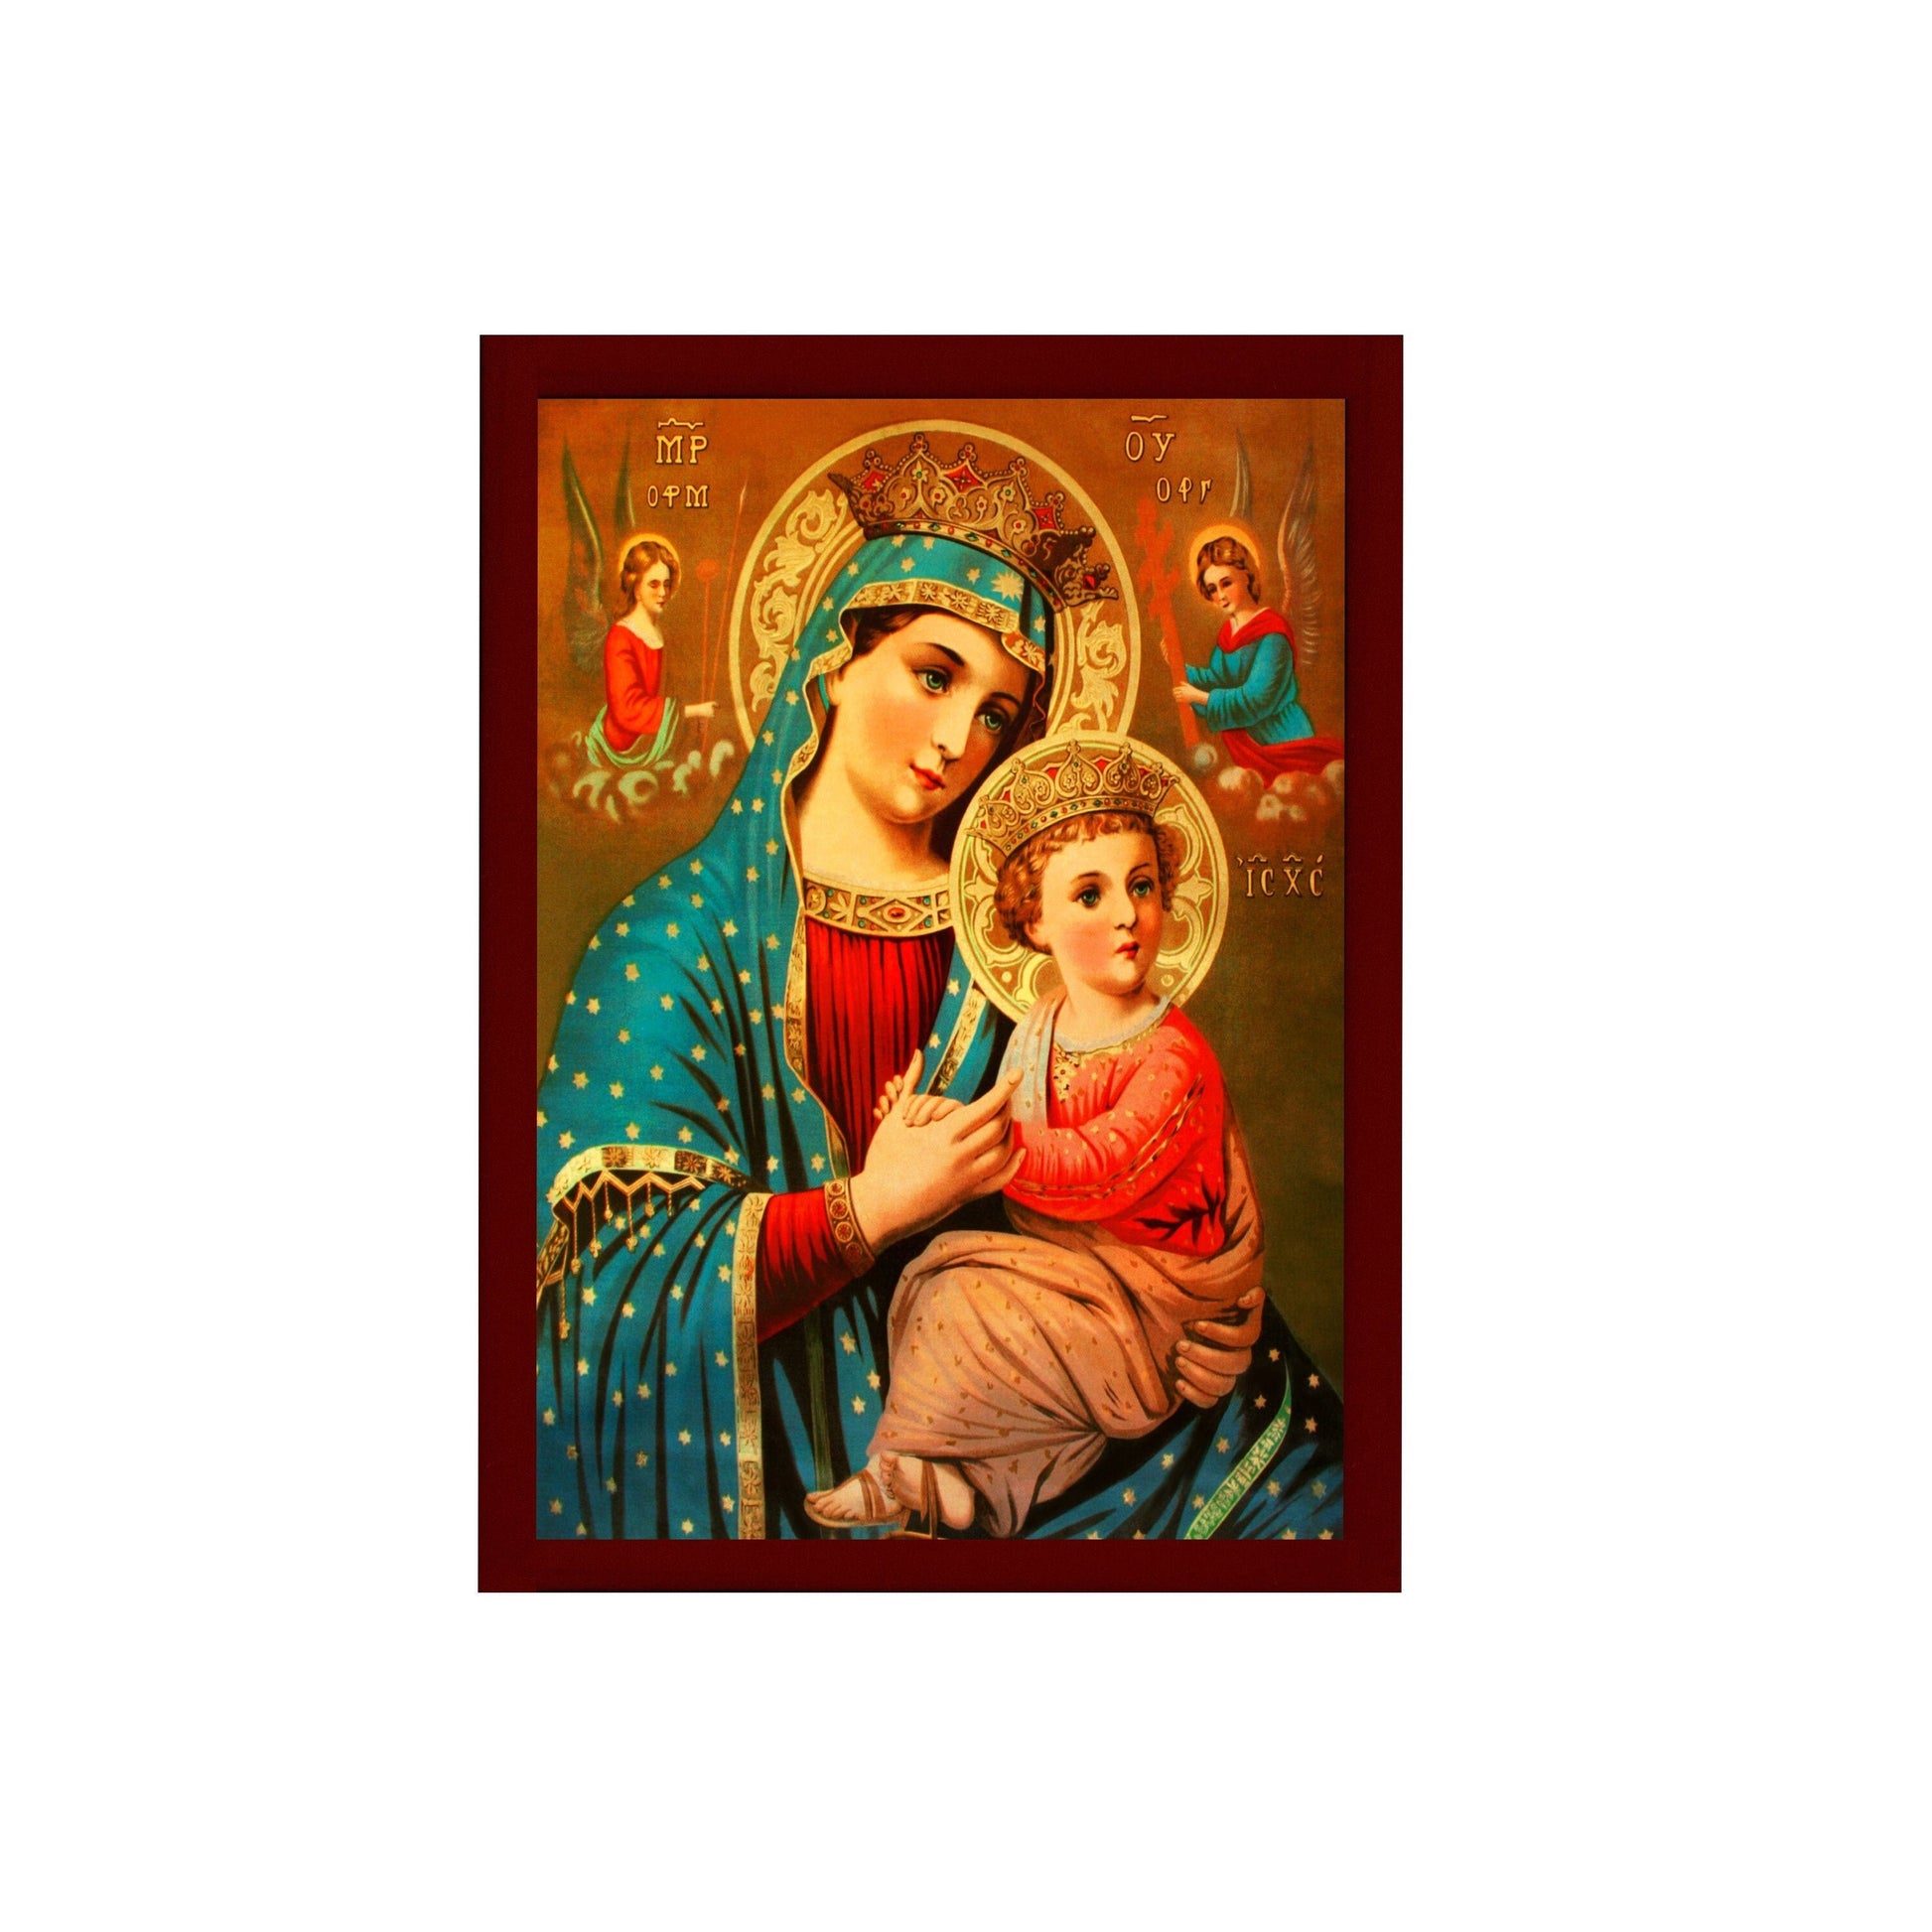 Virgin Mary icon Panagia, Handmade Greek Orthodox icon of Theotokos, Mother of God Byzantine art wall hanging wood plaque, religious decor TheHolyArt